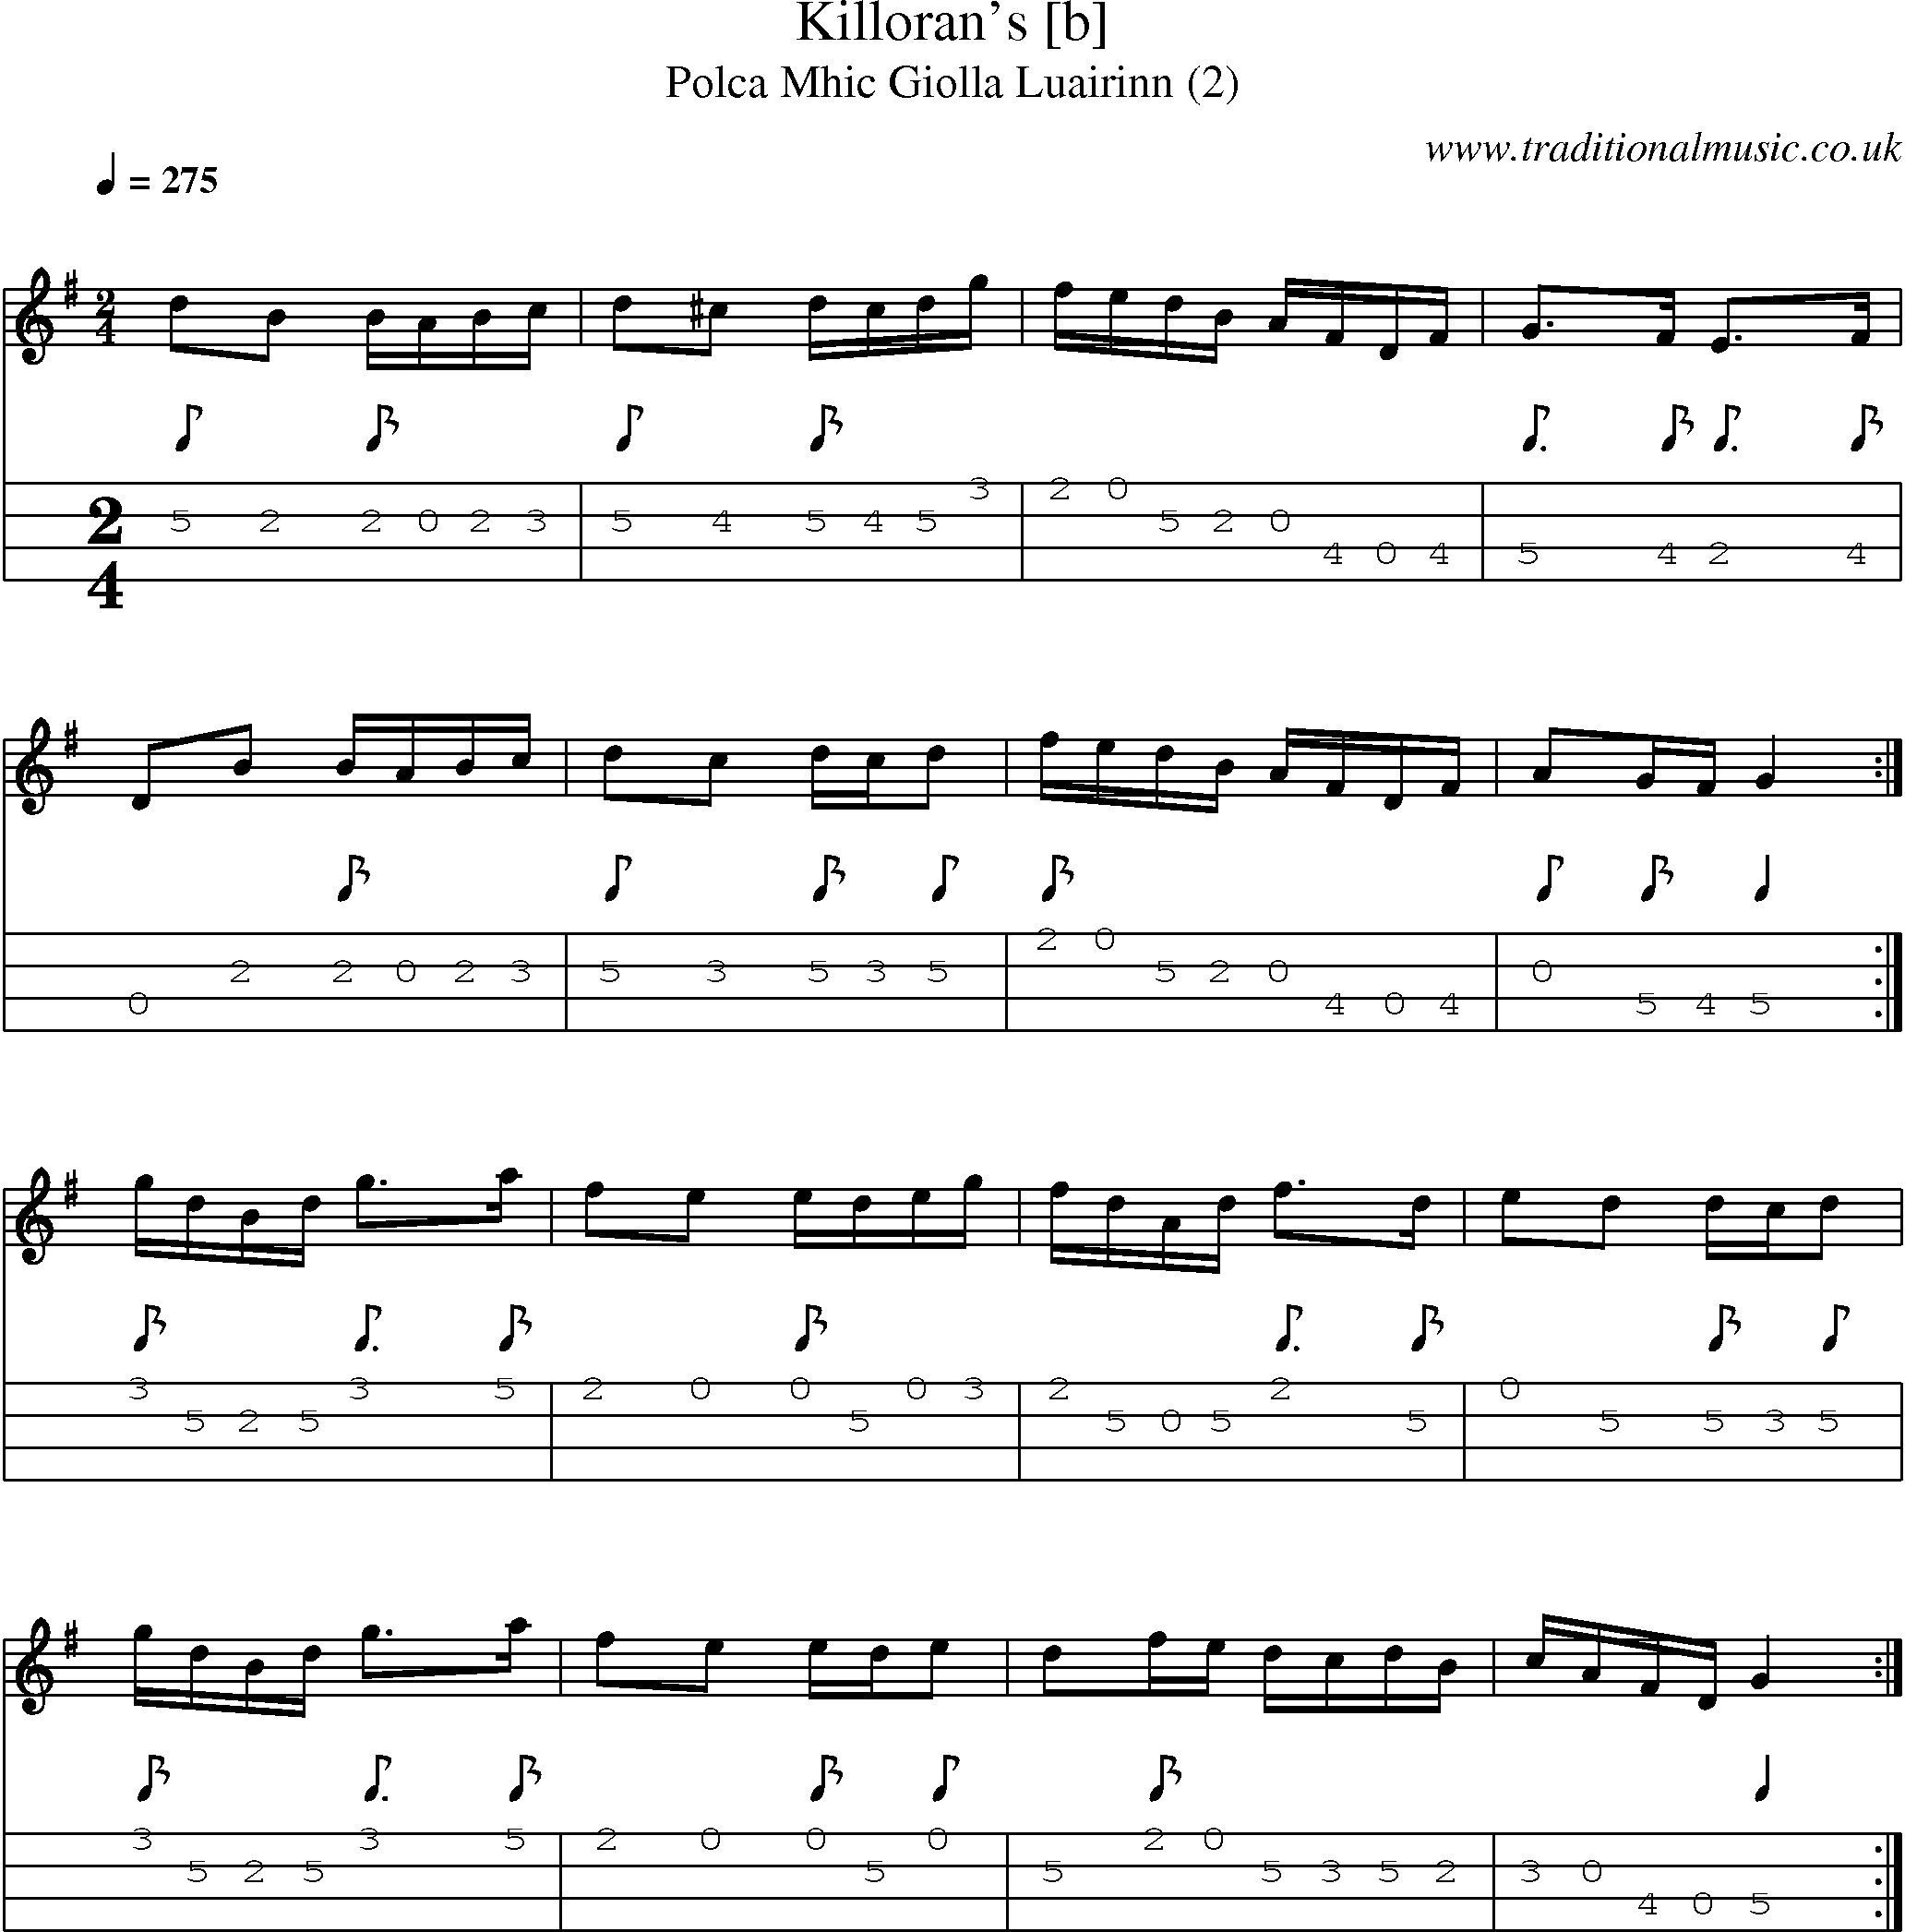 Music Score and Mandolin Tabs for Killorans [b]